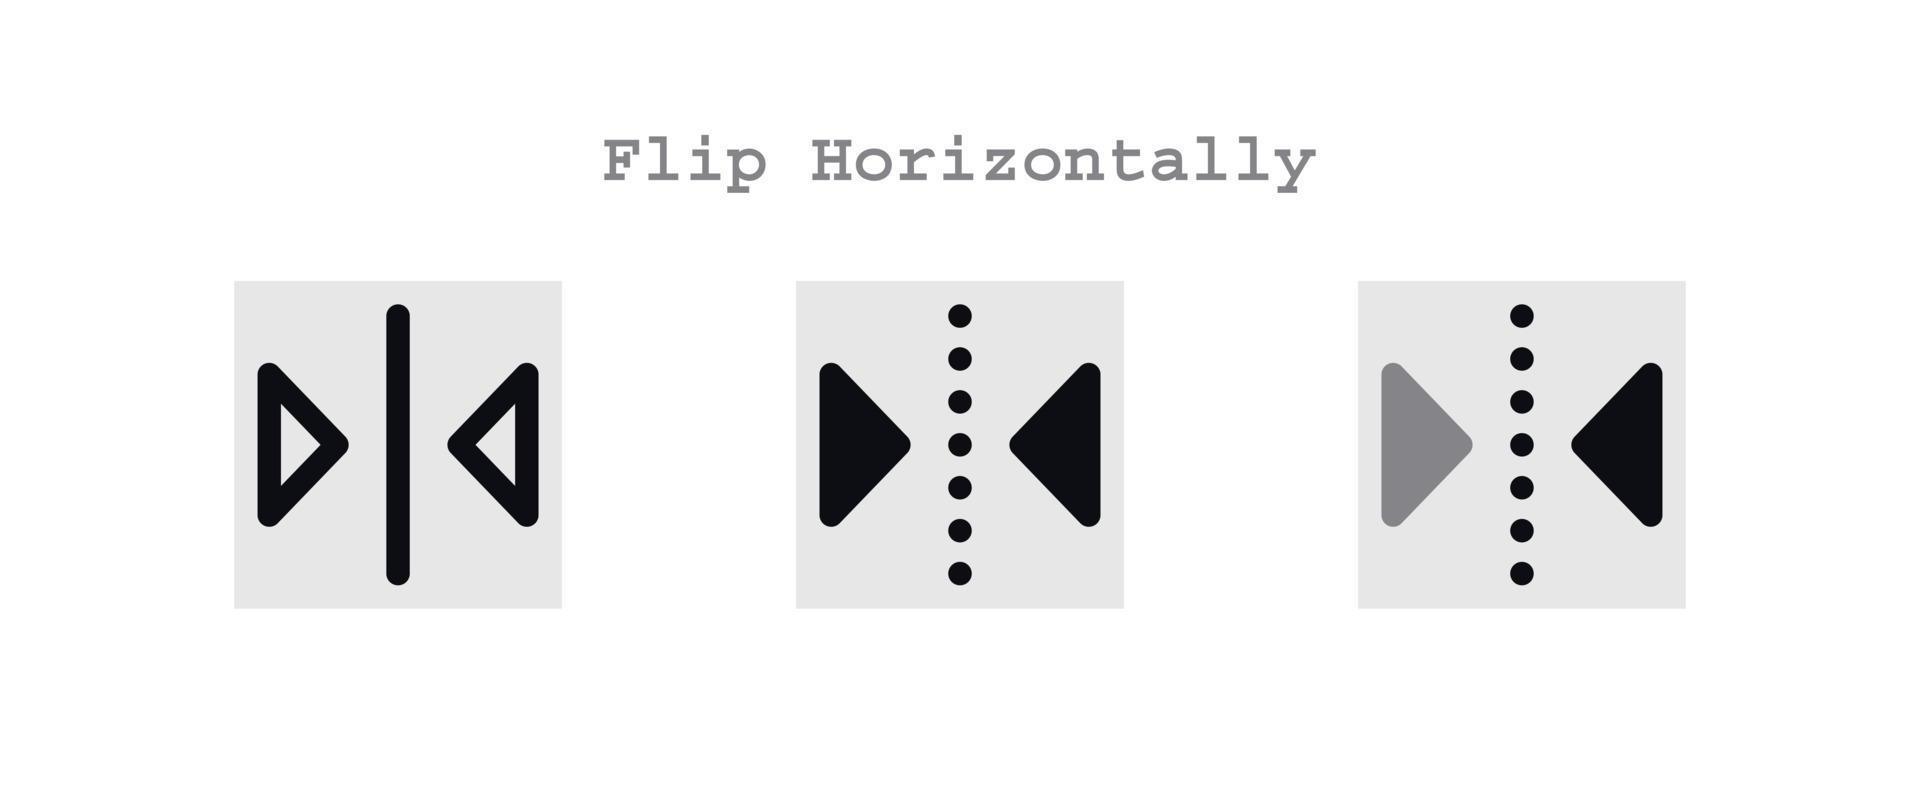 flip horizontally icons set vector